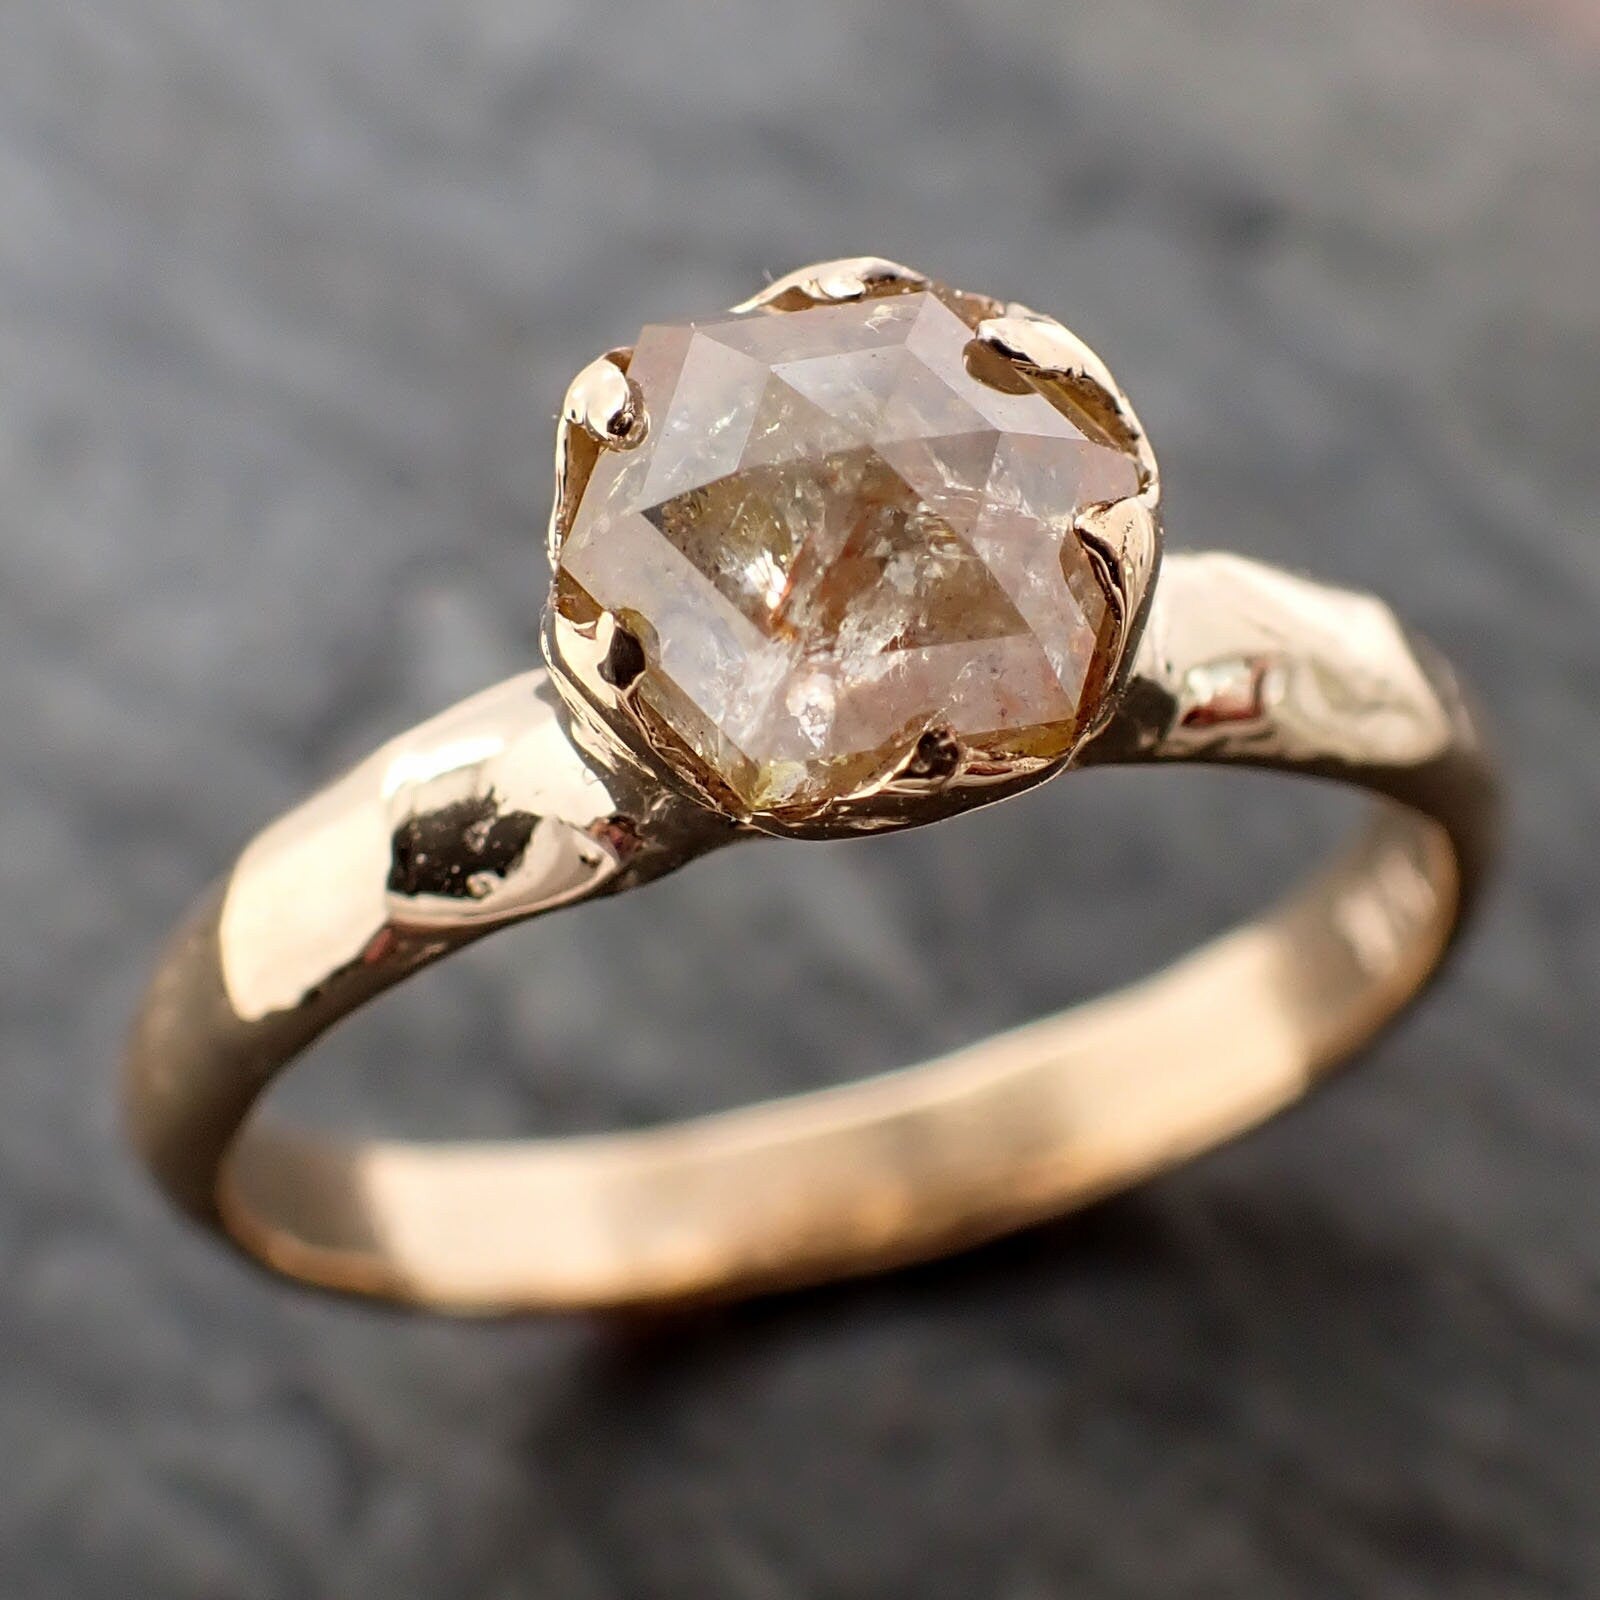 Fancy cut yellow Diamond Solitaire Engagement 18k yellow Gold Wedding Ring byAngeline 2932